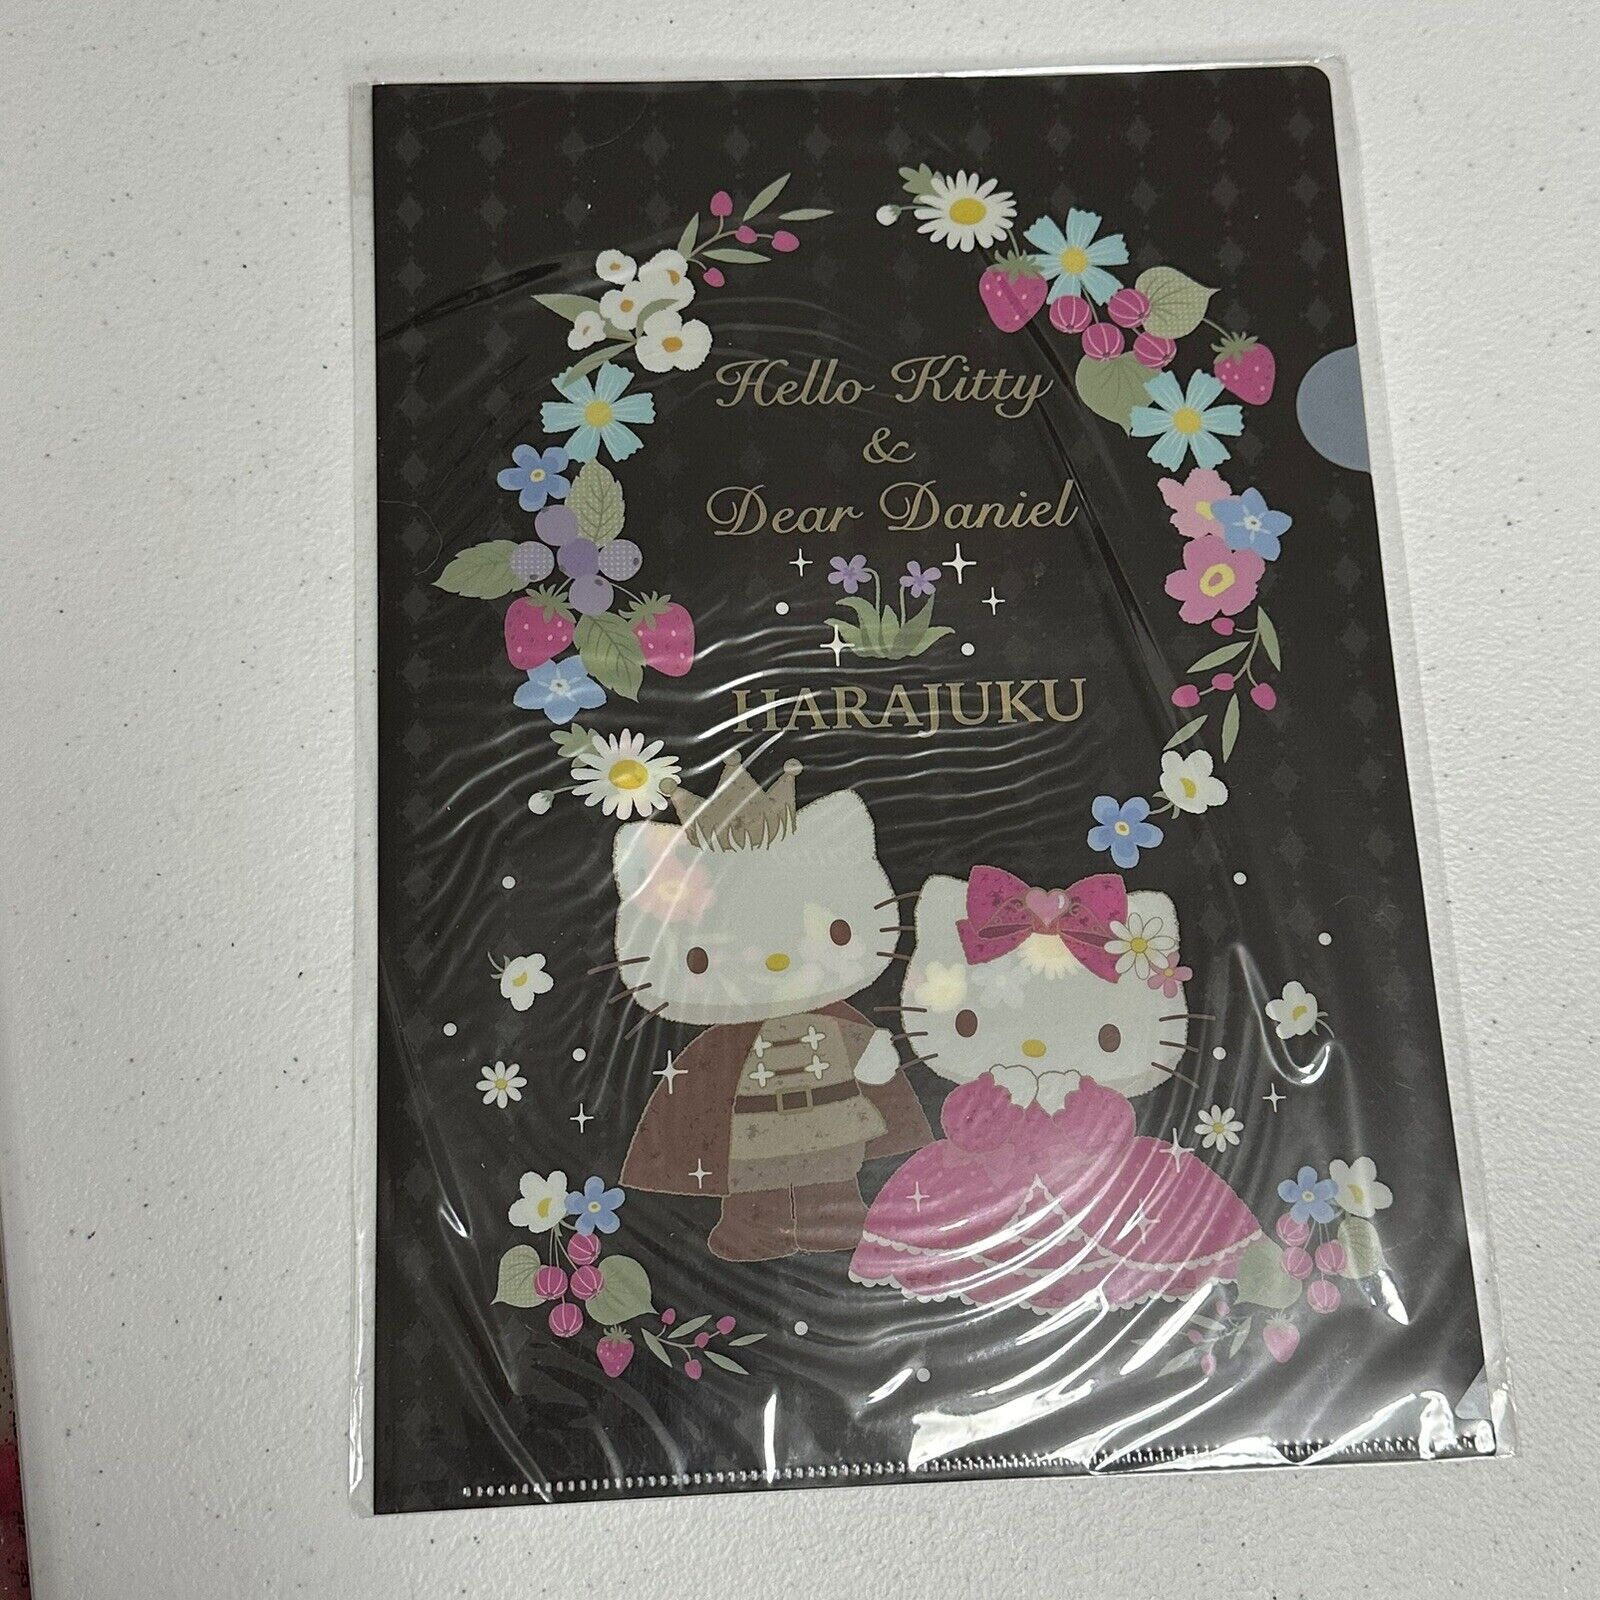 Rare Sanrio Hello Kitty A5 File Dear Daniel & Hello Kitty From Sanrio Japan